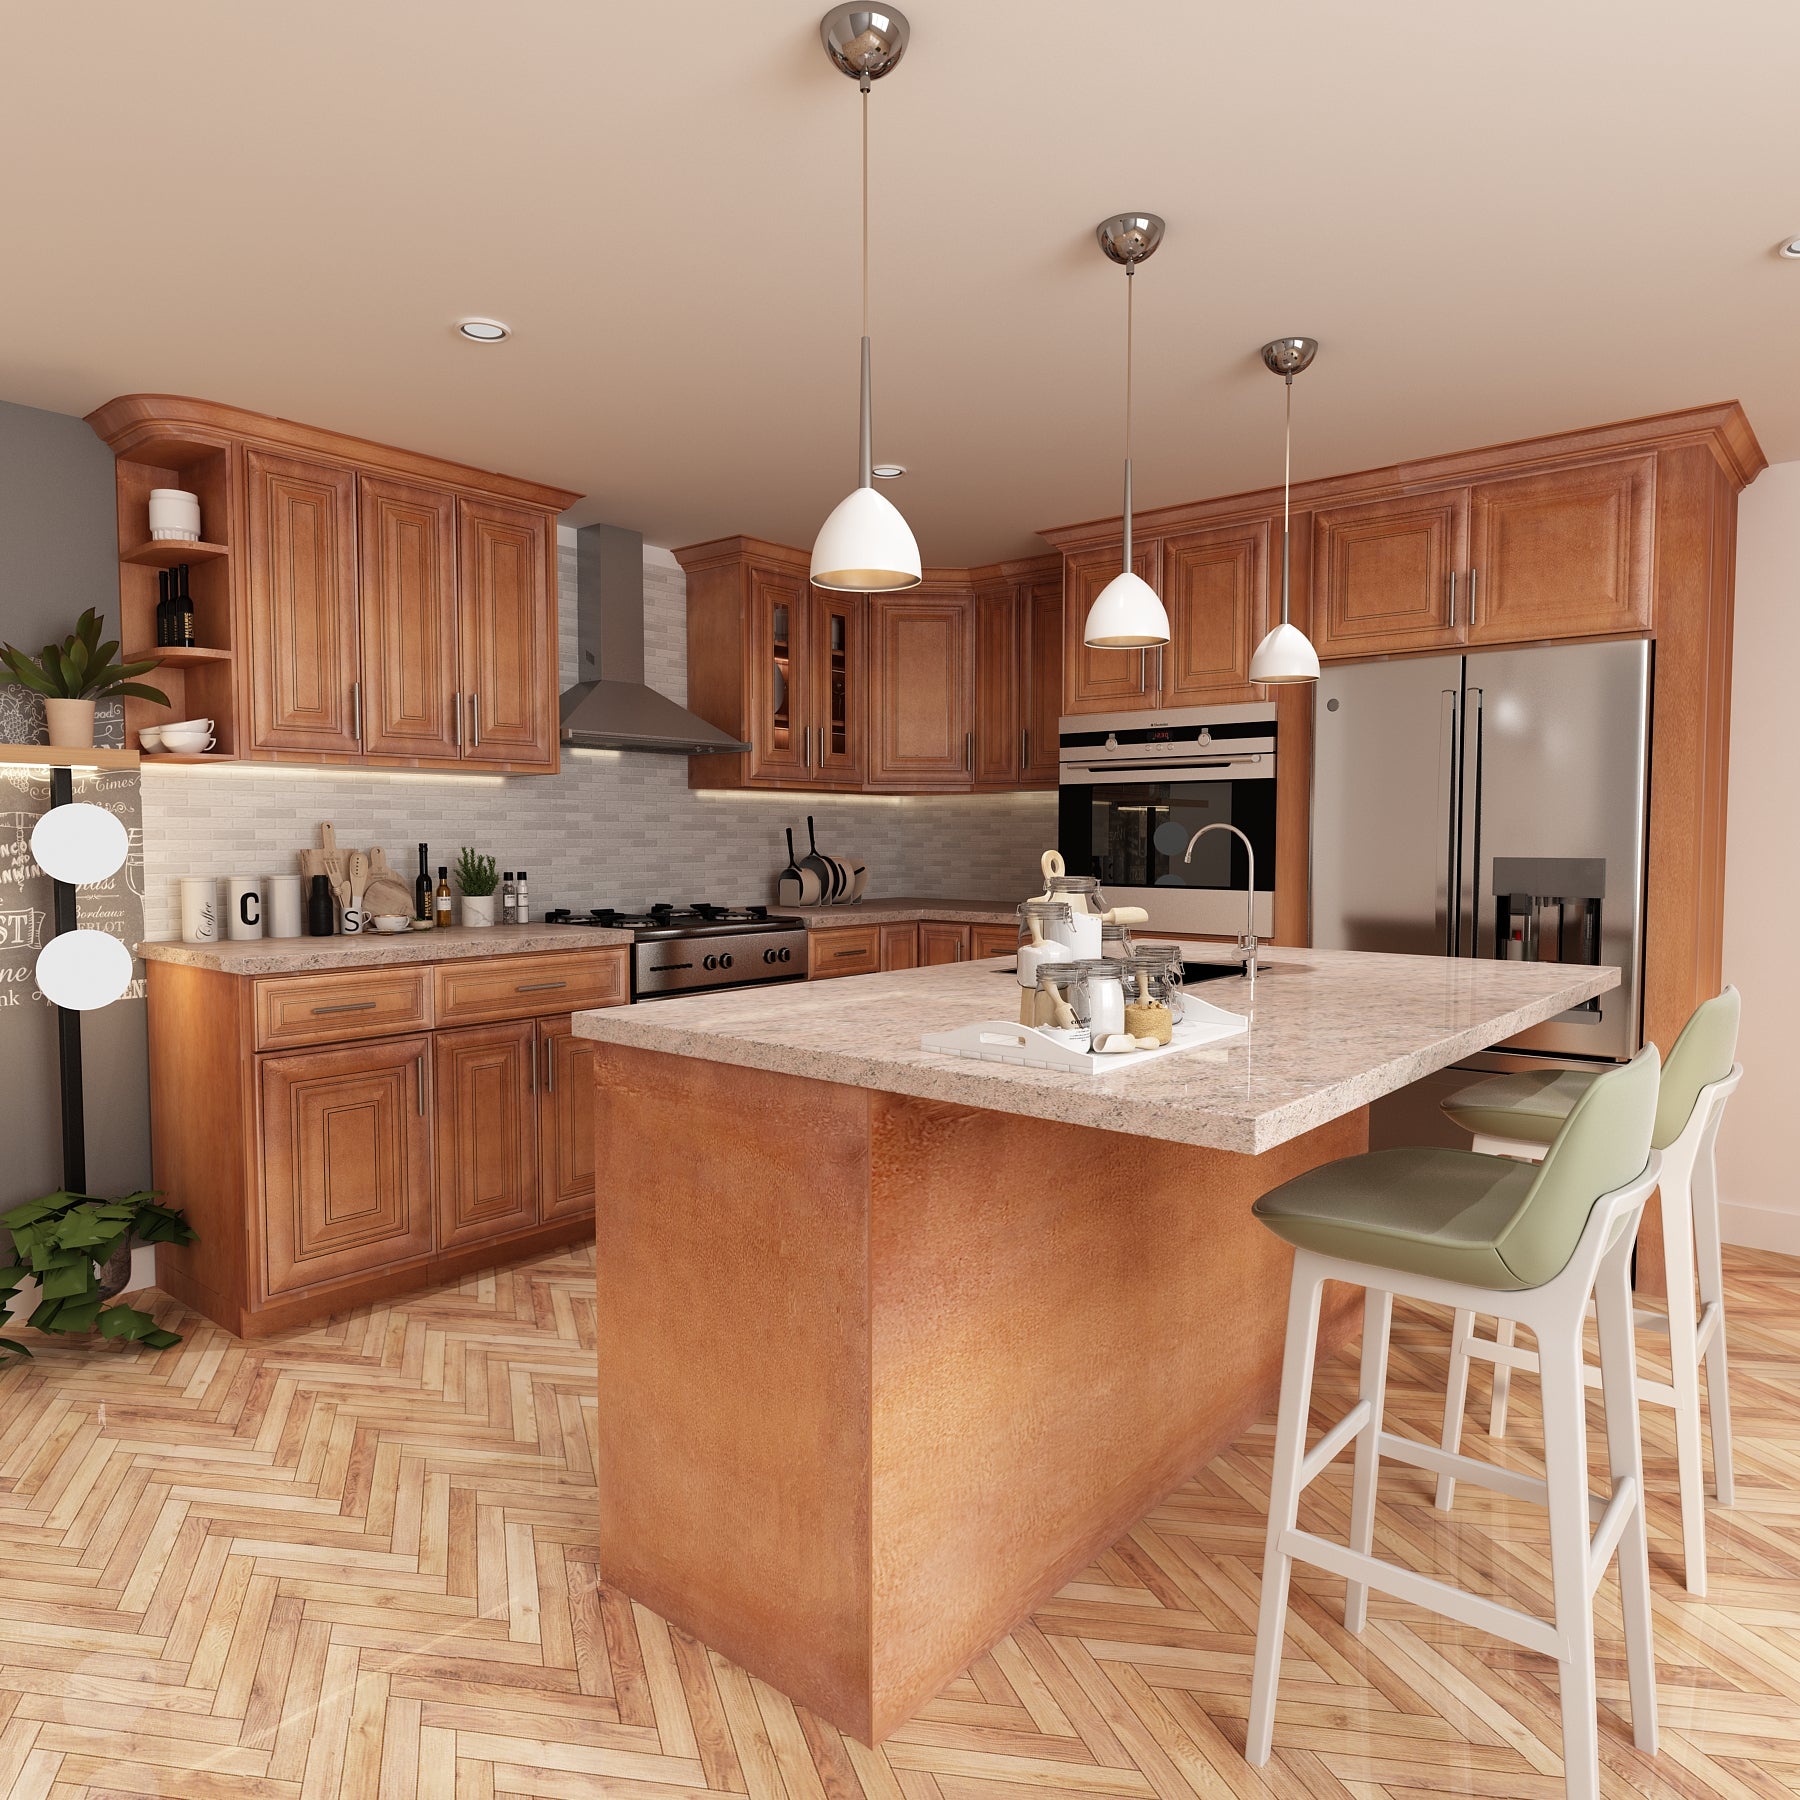 10x10 Kitchen Layout Design Charleston Saddle Cabinets